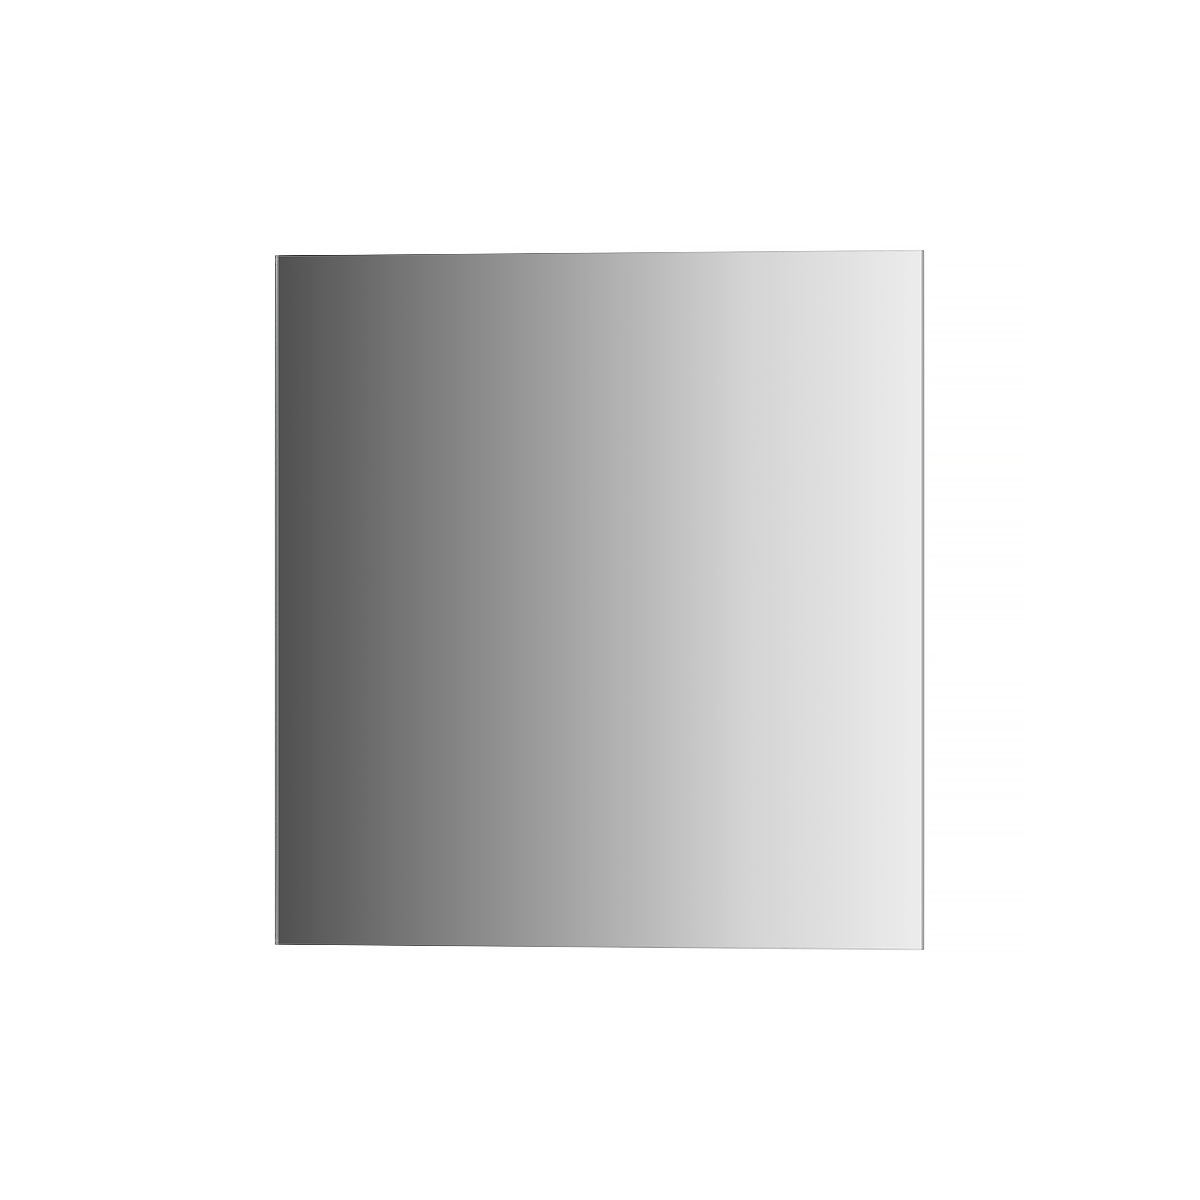 Зеркальная плитка со шлифованной кромкой  Evoform BY 1407 25x25см зеркальная плитка mirox 3g sensea nnlm31 квадратная 30x30 см глянцевая цвет серебро 1 шт